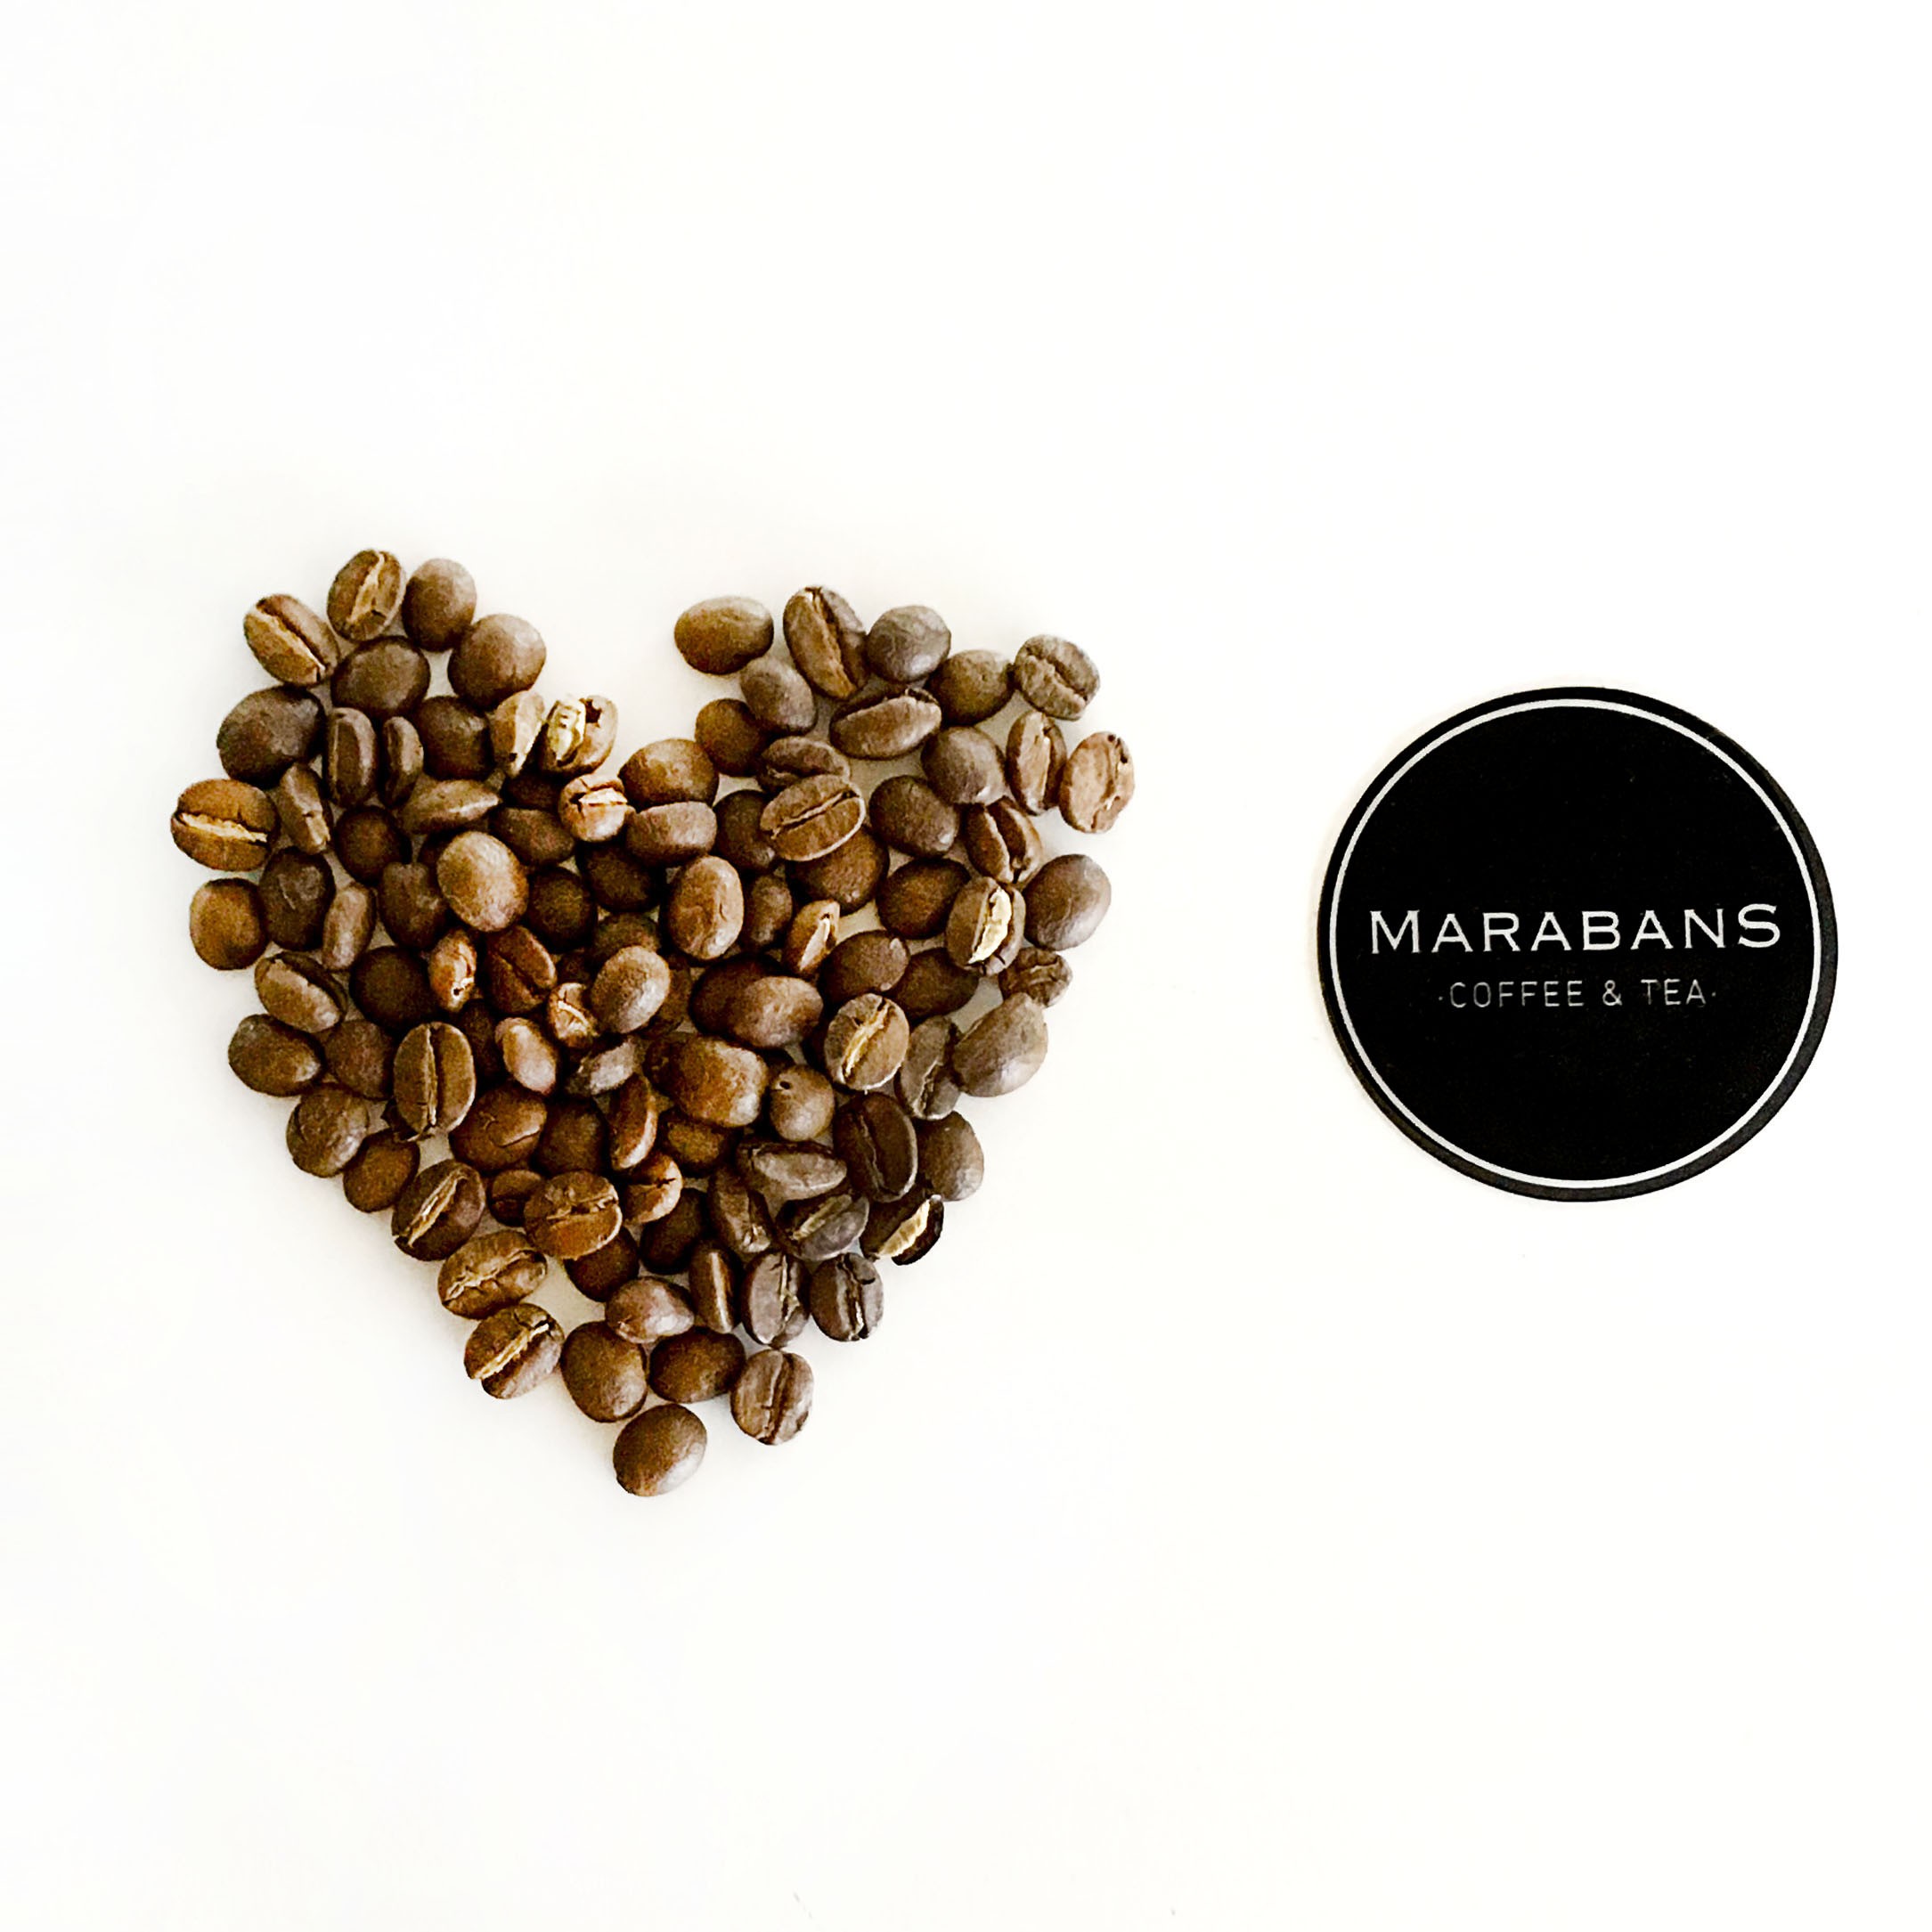 MARABANS COFFEE & TEA EN MENORCA